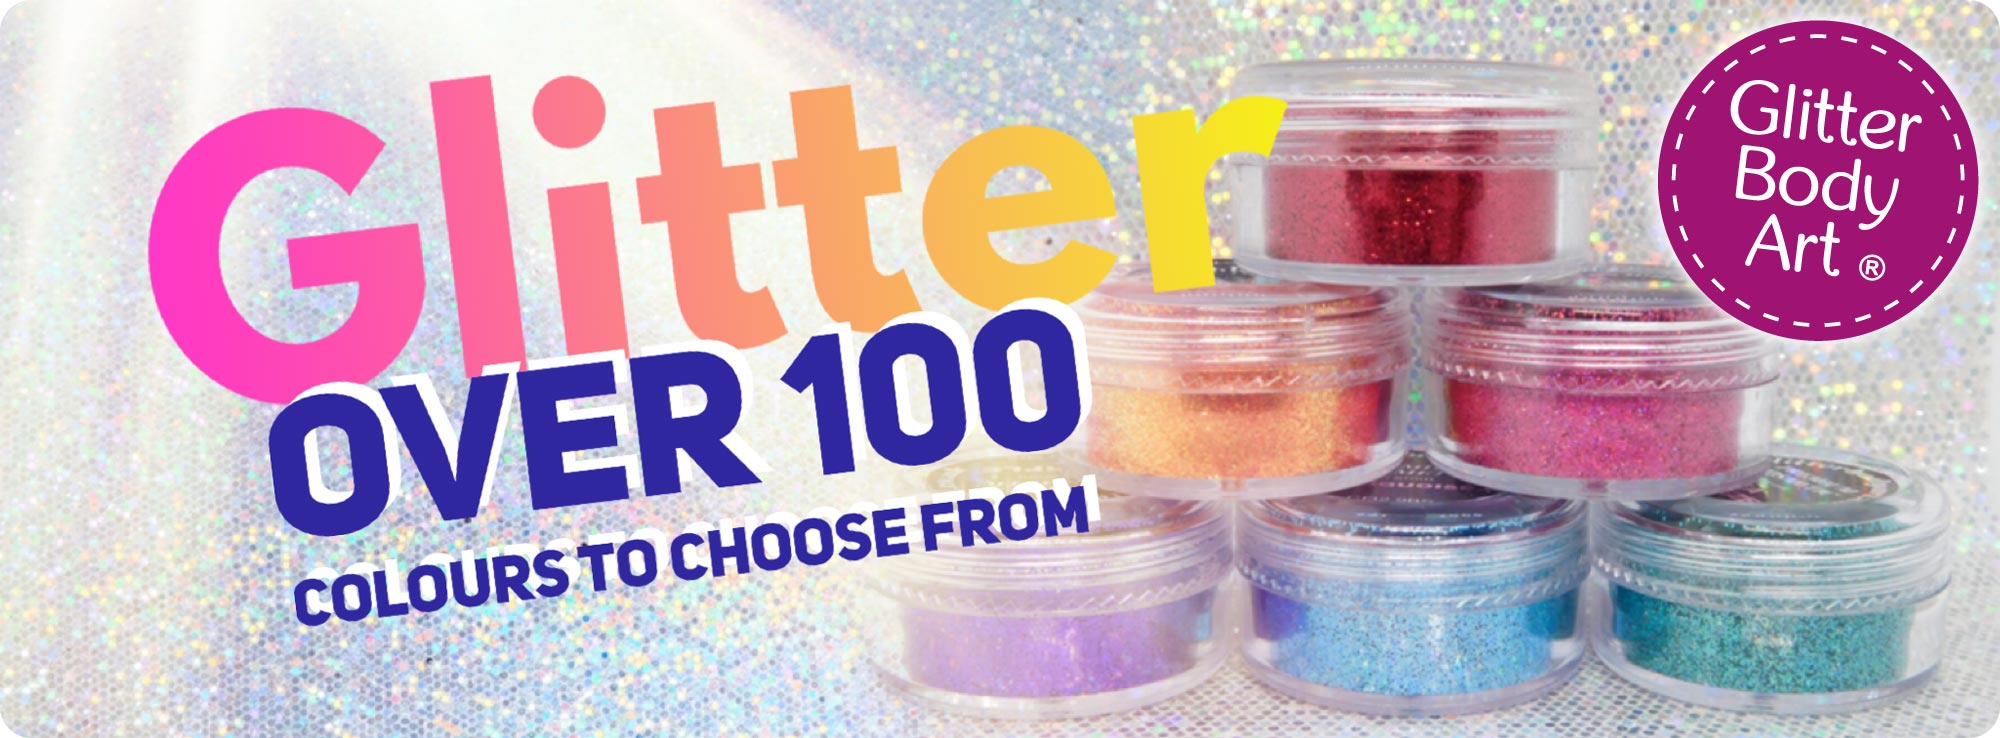 cosmetic glitter collection, make-up glitter, loose glitter, nail art glitter,